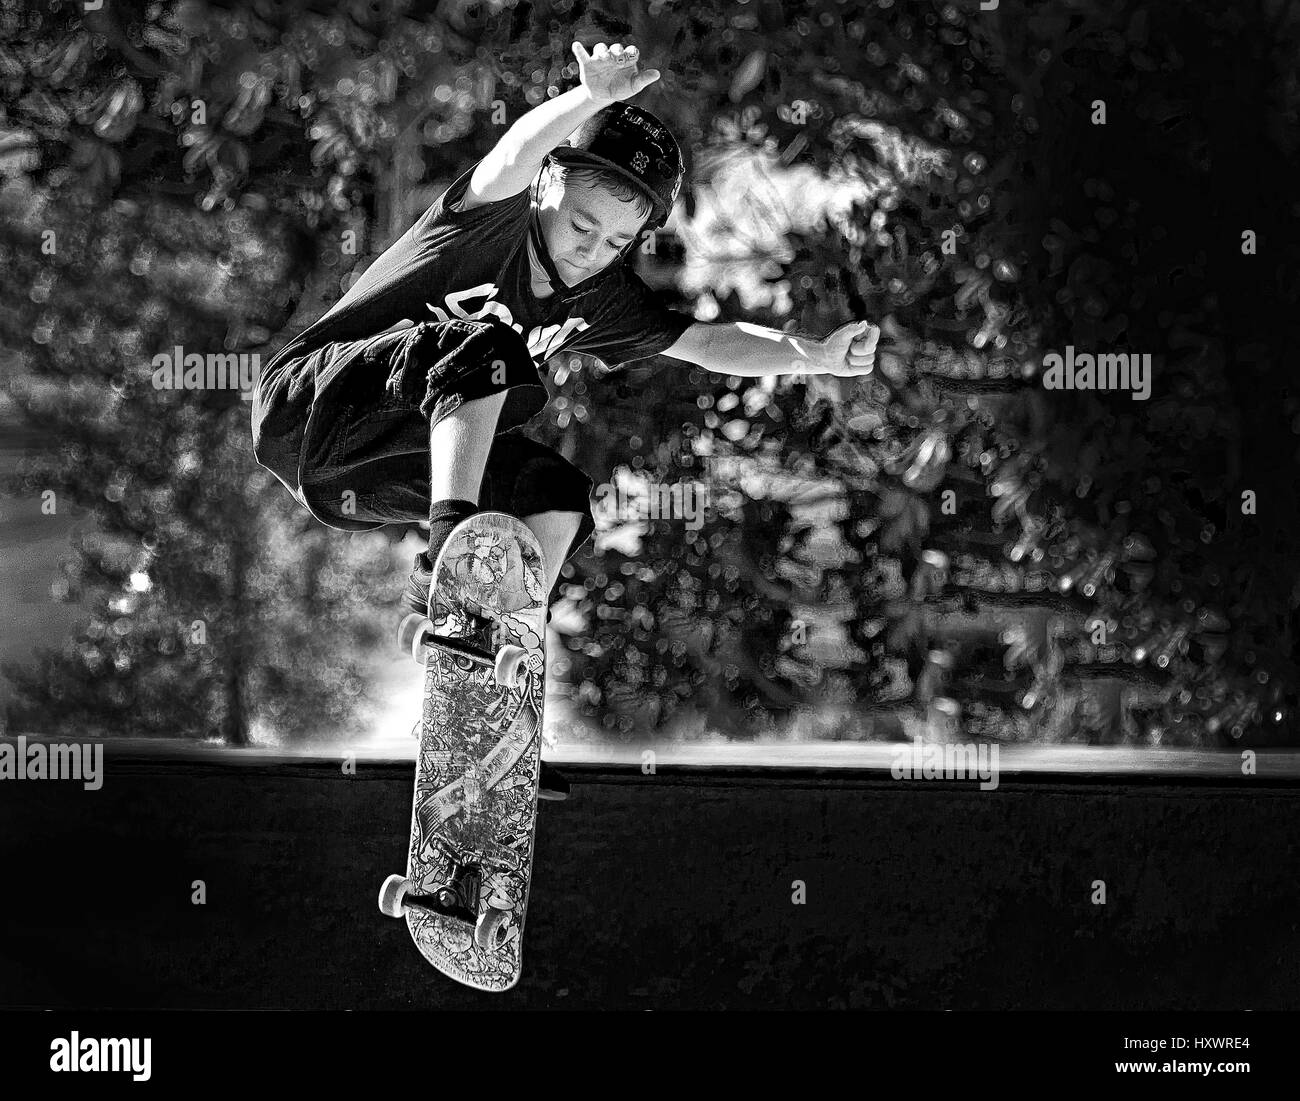 young boy skate boarding  in black & white Stock Photo